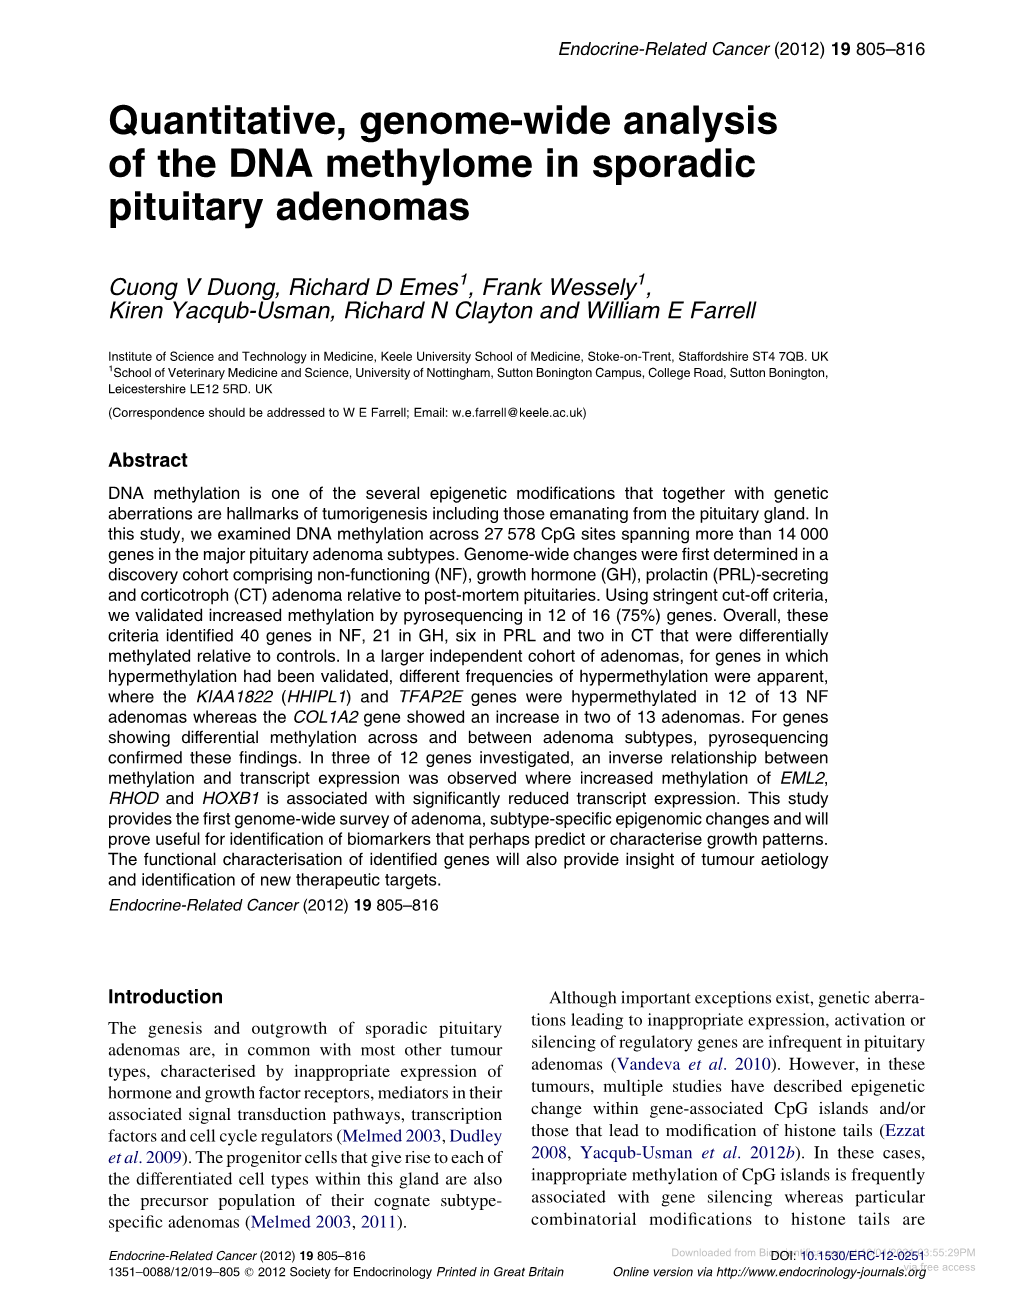 Quantitative, Genome-Wide Analysis of the DNA Methylome in Sporadic Pituitary Adenomas